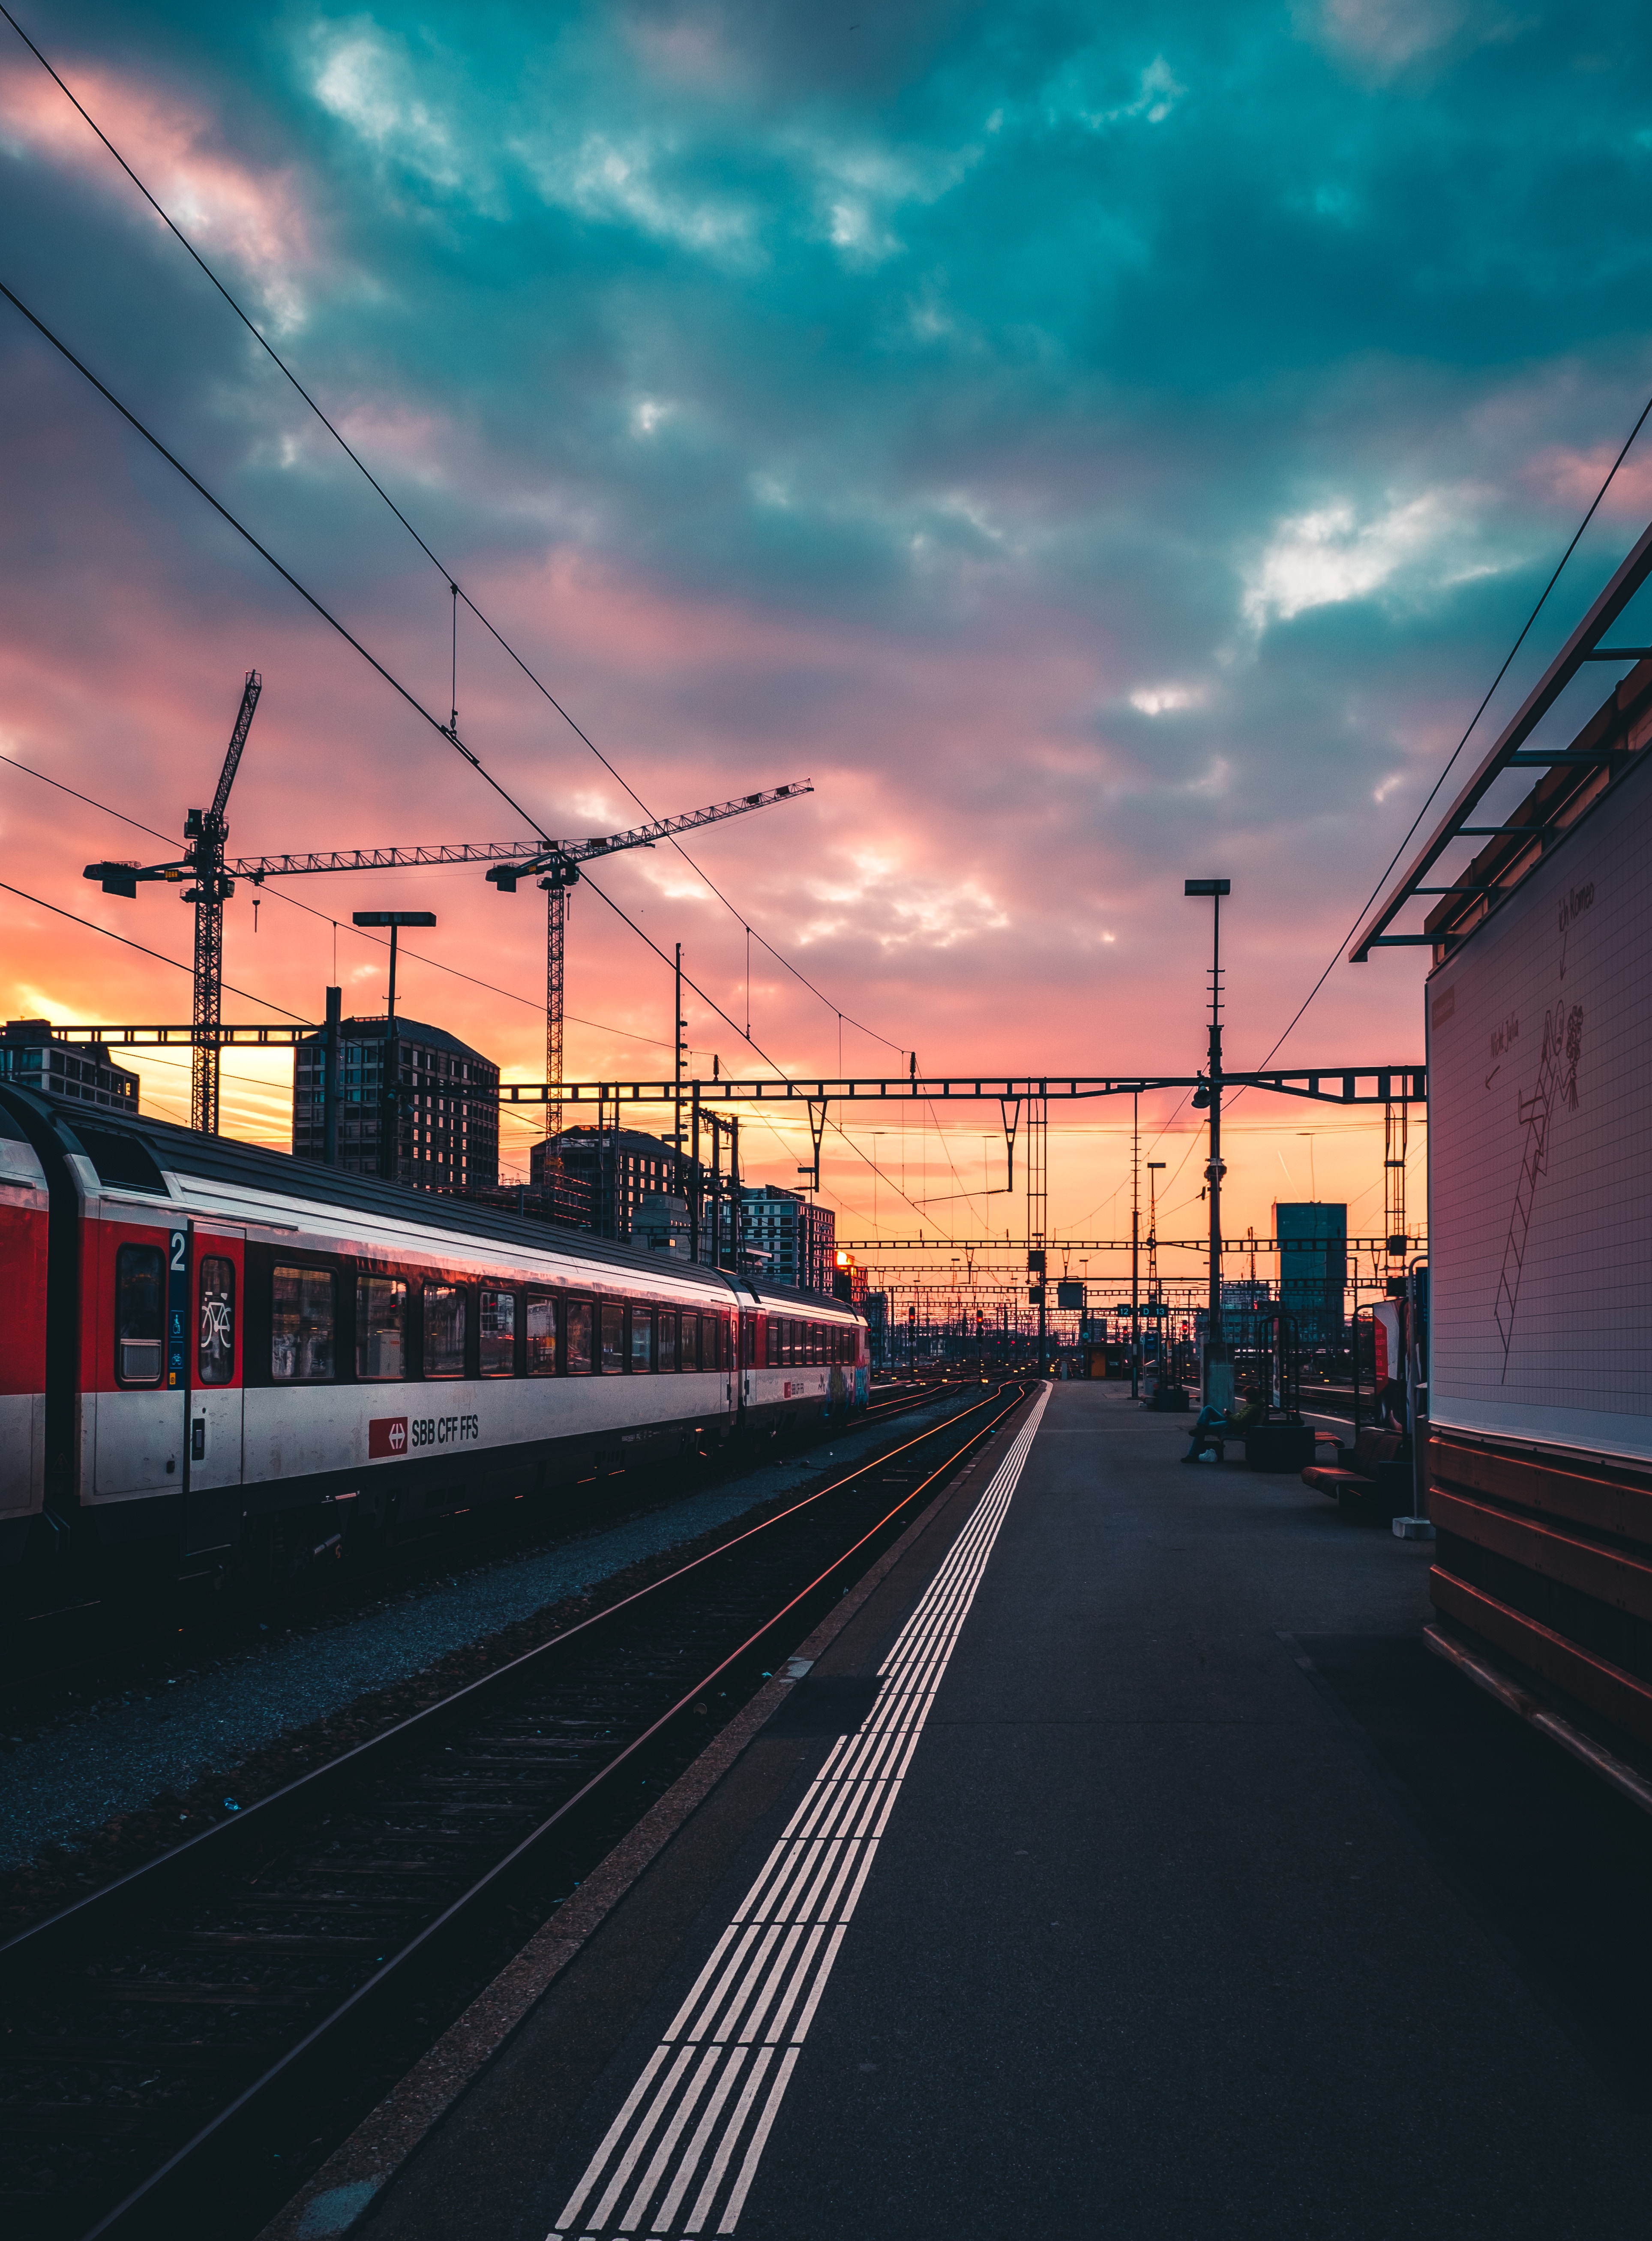 sunset, train, cities, railway, station, expectation, waiting